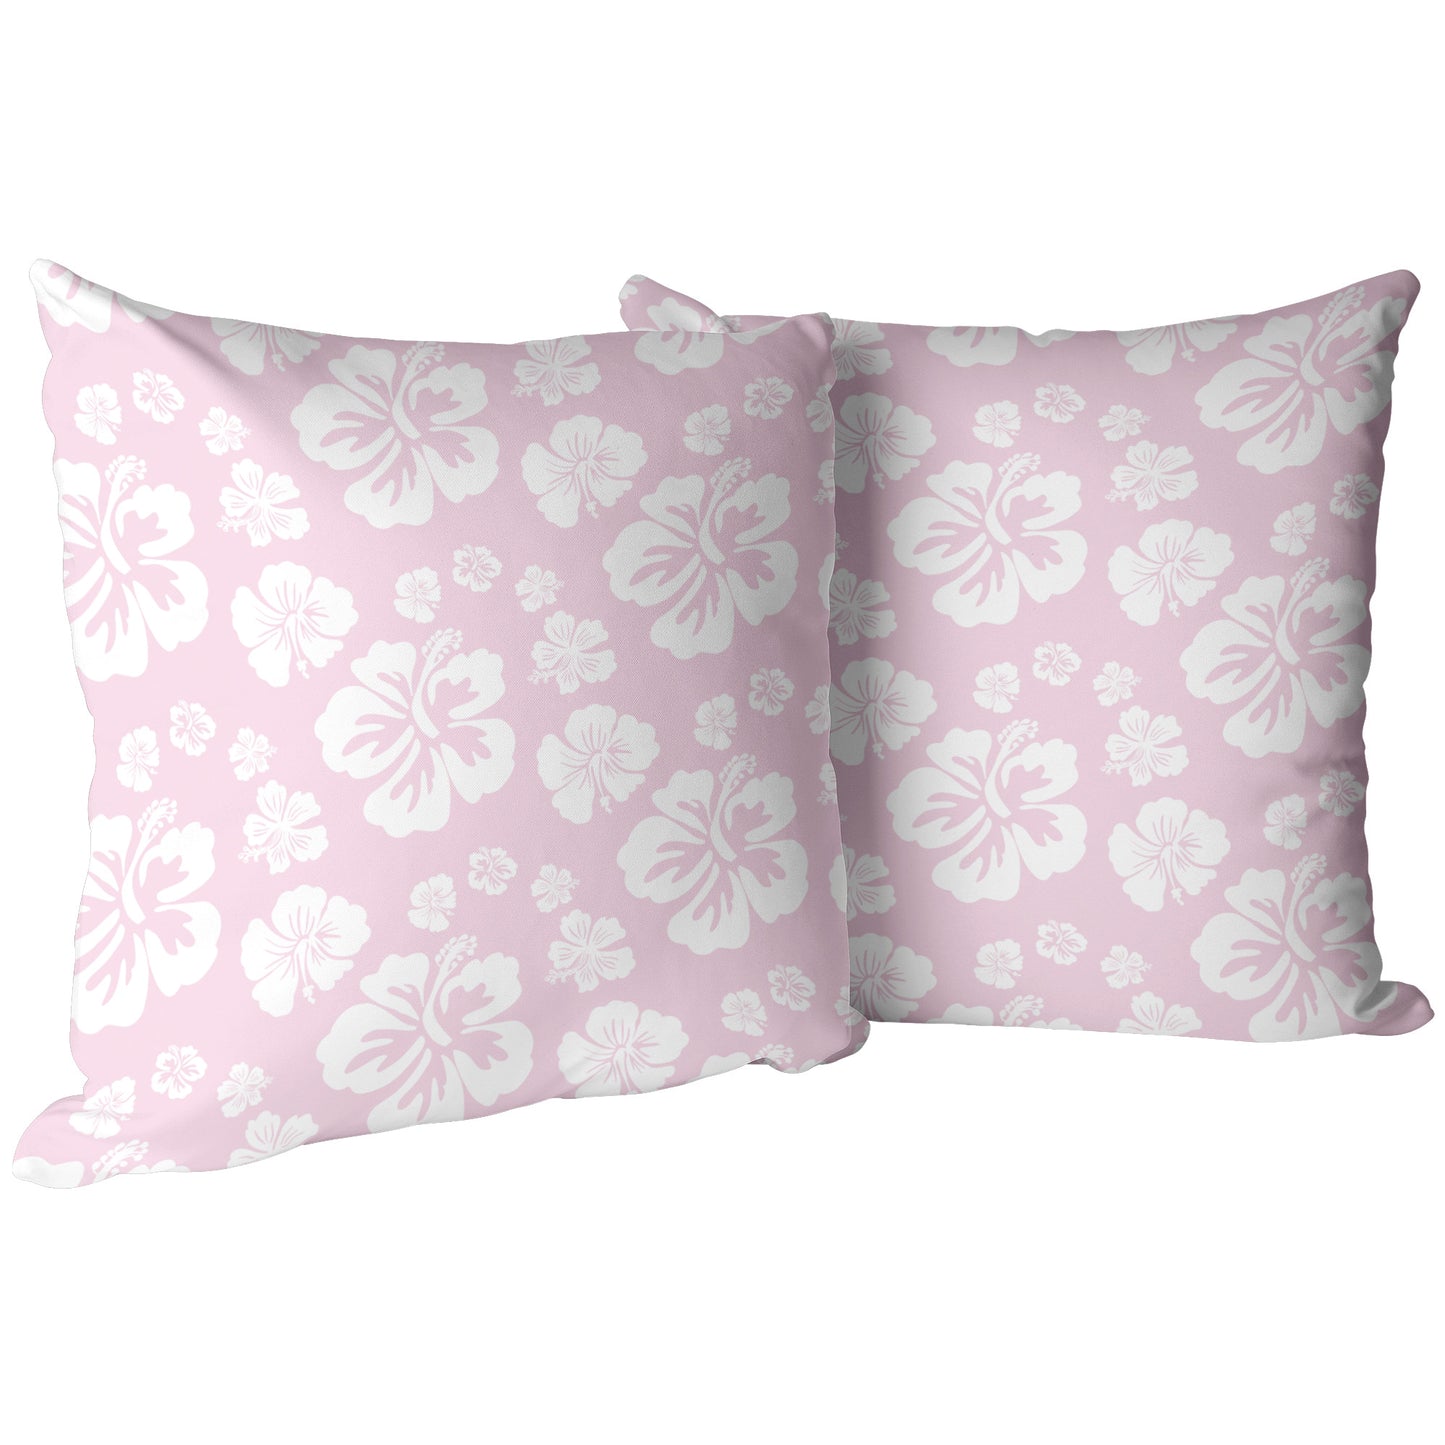 Hibiscus Soiree, White Hibiscus on Pink, Throw Pillow